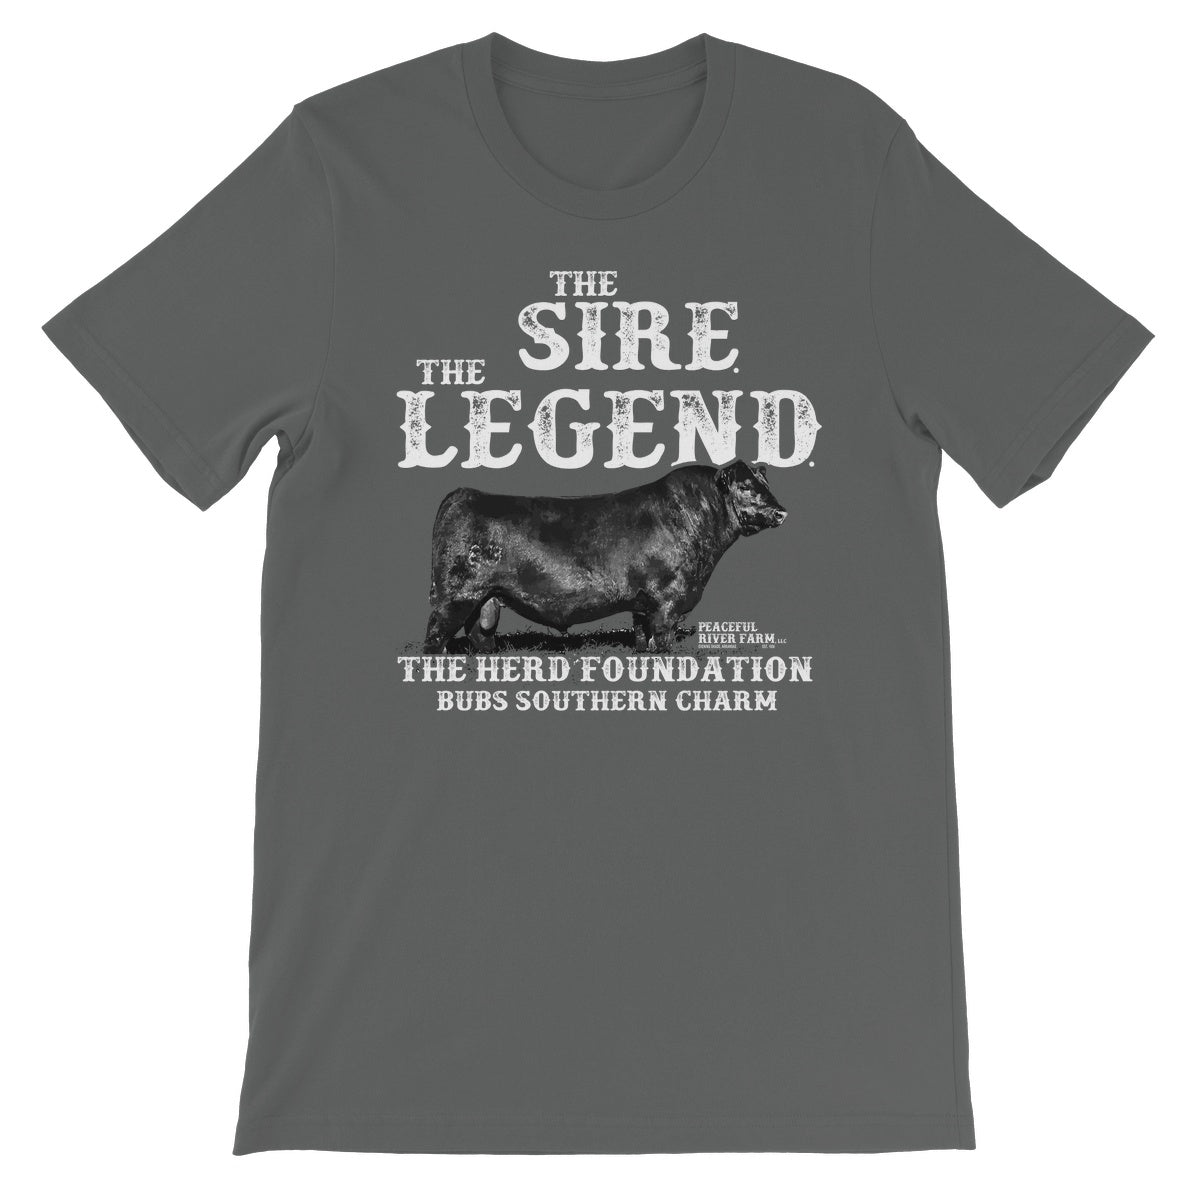 The Legend Unisex Short Sleeve T-Shirt